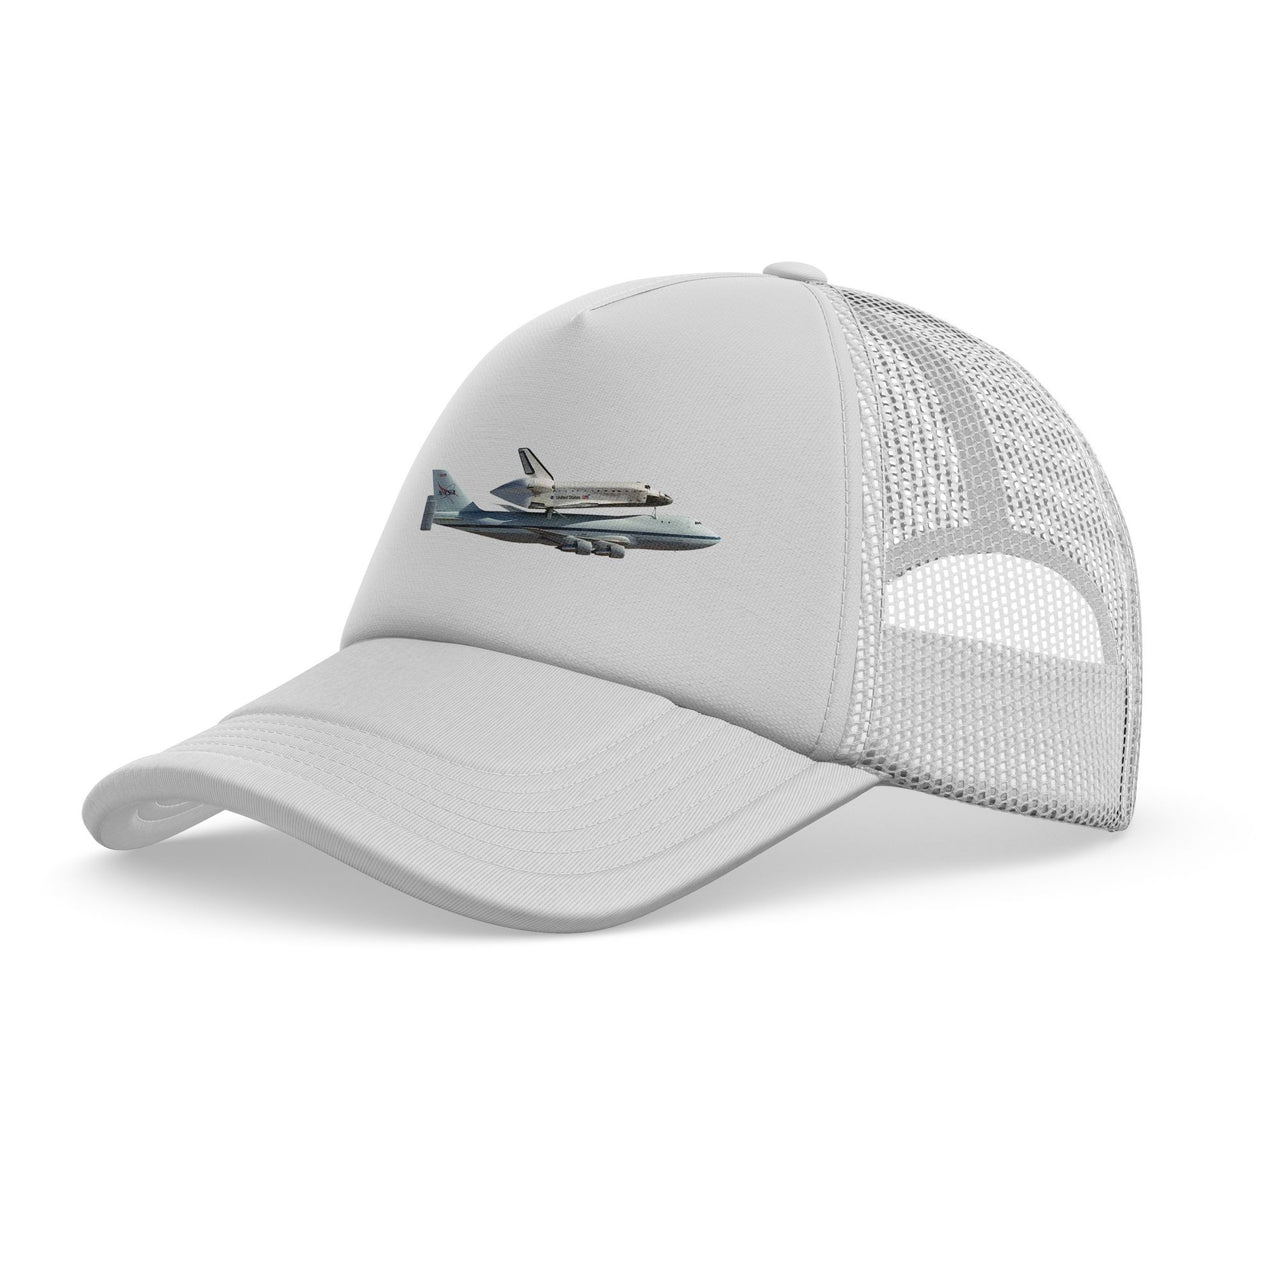 Space shuttle on 747 Designed Trucker Caps & Hats